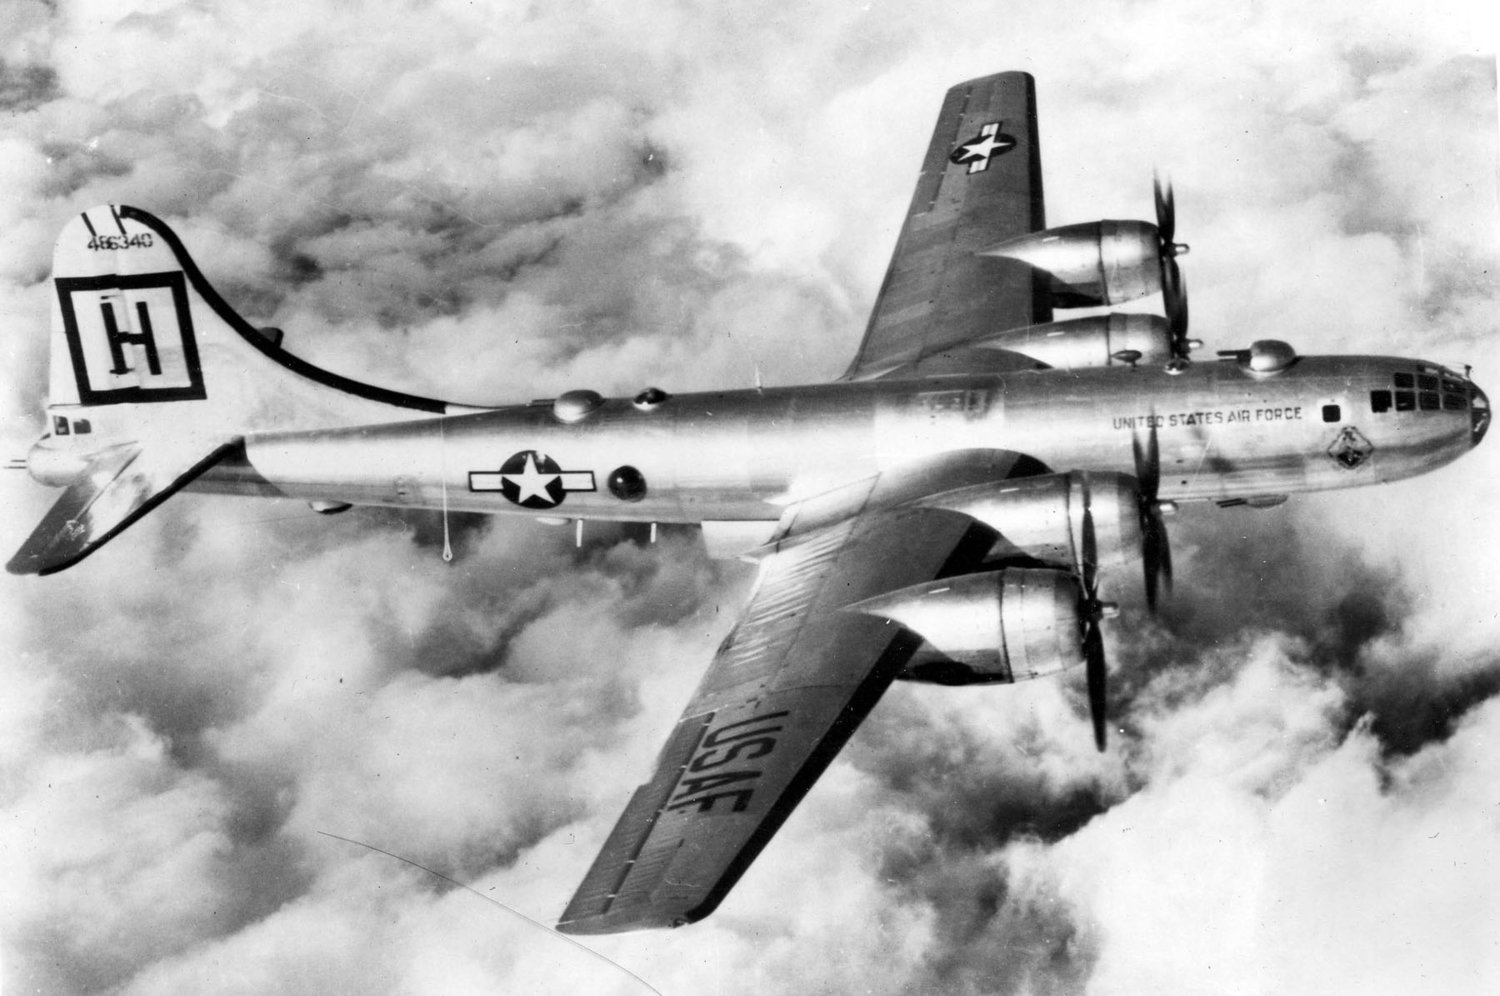 The U.S. Air Force used Boeing B-29 Superfortress bombers, like the one seen here, in World War II.